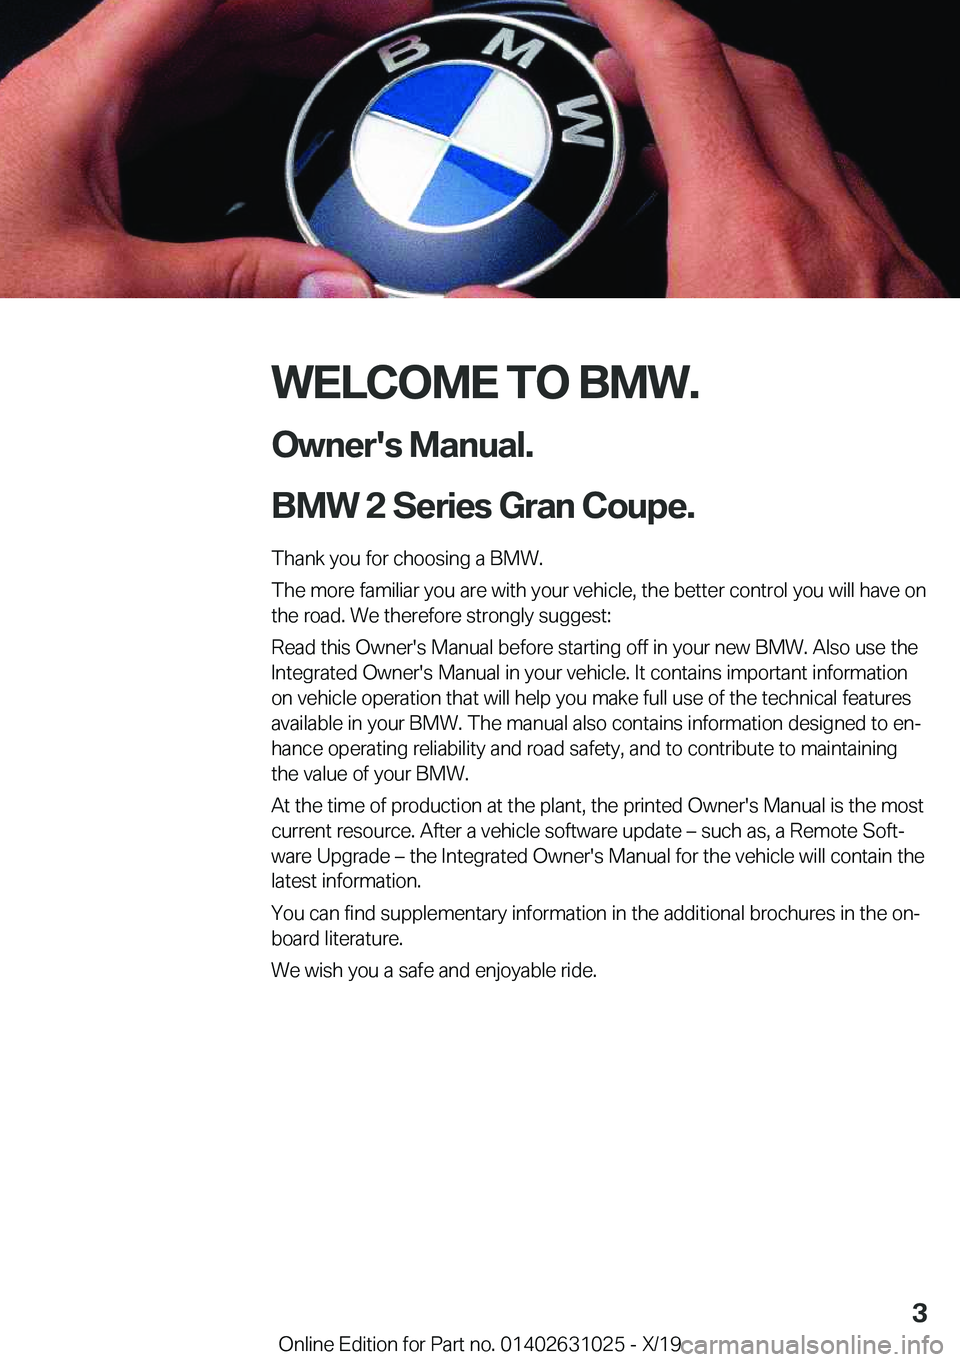 BMW 2 SERIES GRAN COUPE 2020  Owners Manual �W�E�L�C�O�M�E��T�O��B�M�W�.�O�w�n�e�r�'�s��M�a�n�u�a�l�.
�B�M�W��2��S�e�r�i�e�s��G�r�a�n��C�o�u�p�e�.
�T�h�a�n�k��y�o�u��f�o�r��c�h�o�o�s�i�n�g��a��B�M�W�.
�T�h�e��m�o�r�e��f�a�m�i�